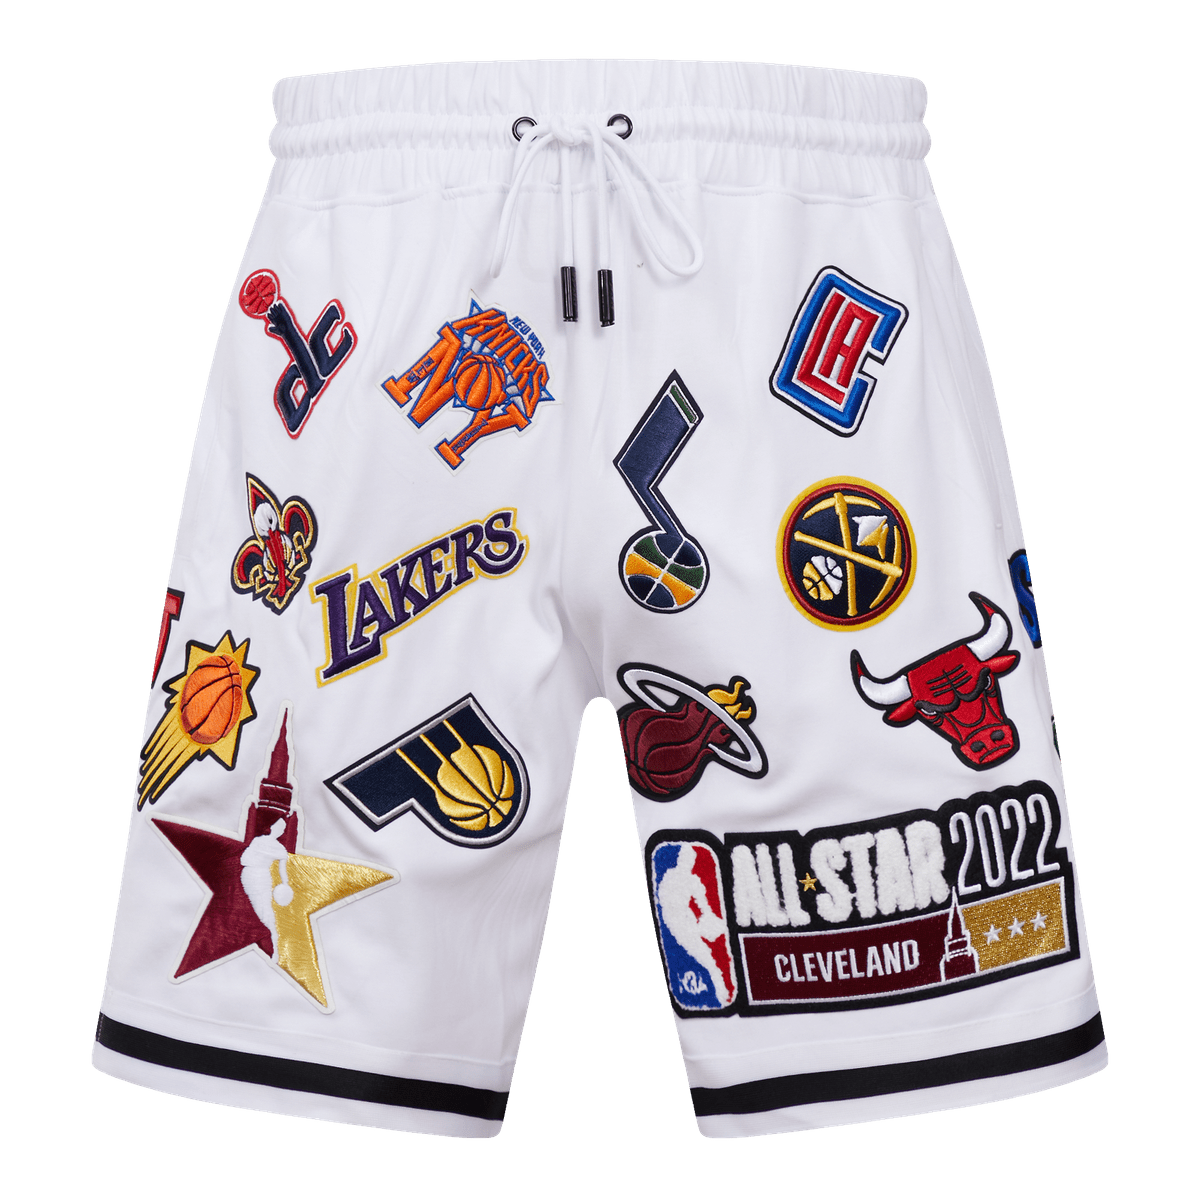 Pro Max - 2022 NBA All-Star shorts set (white) – Major Key